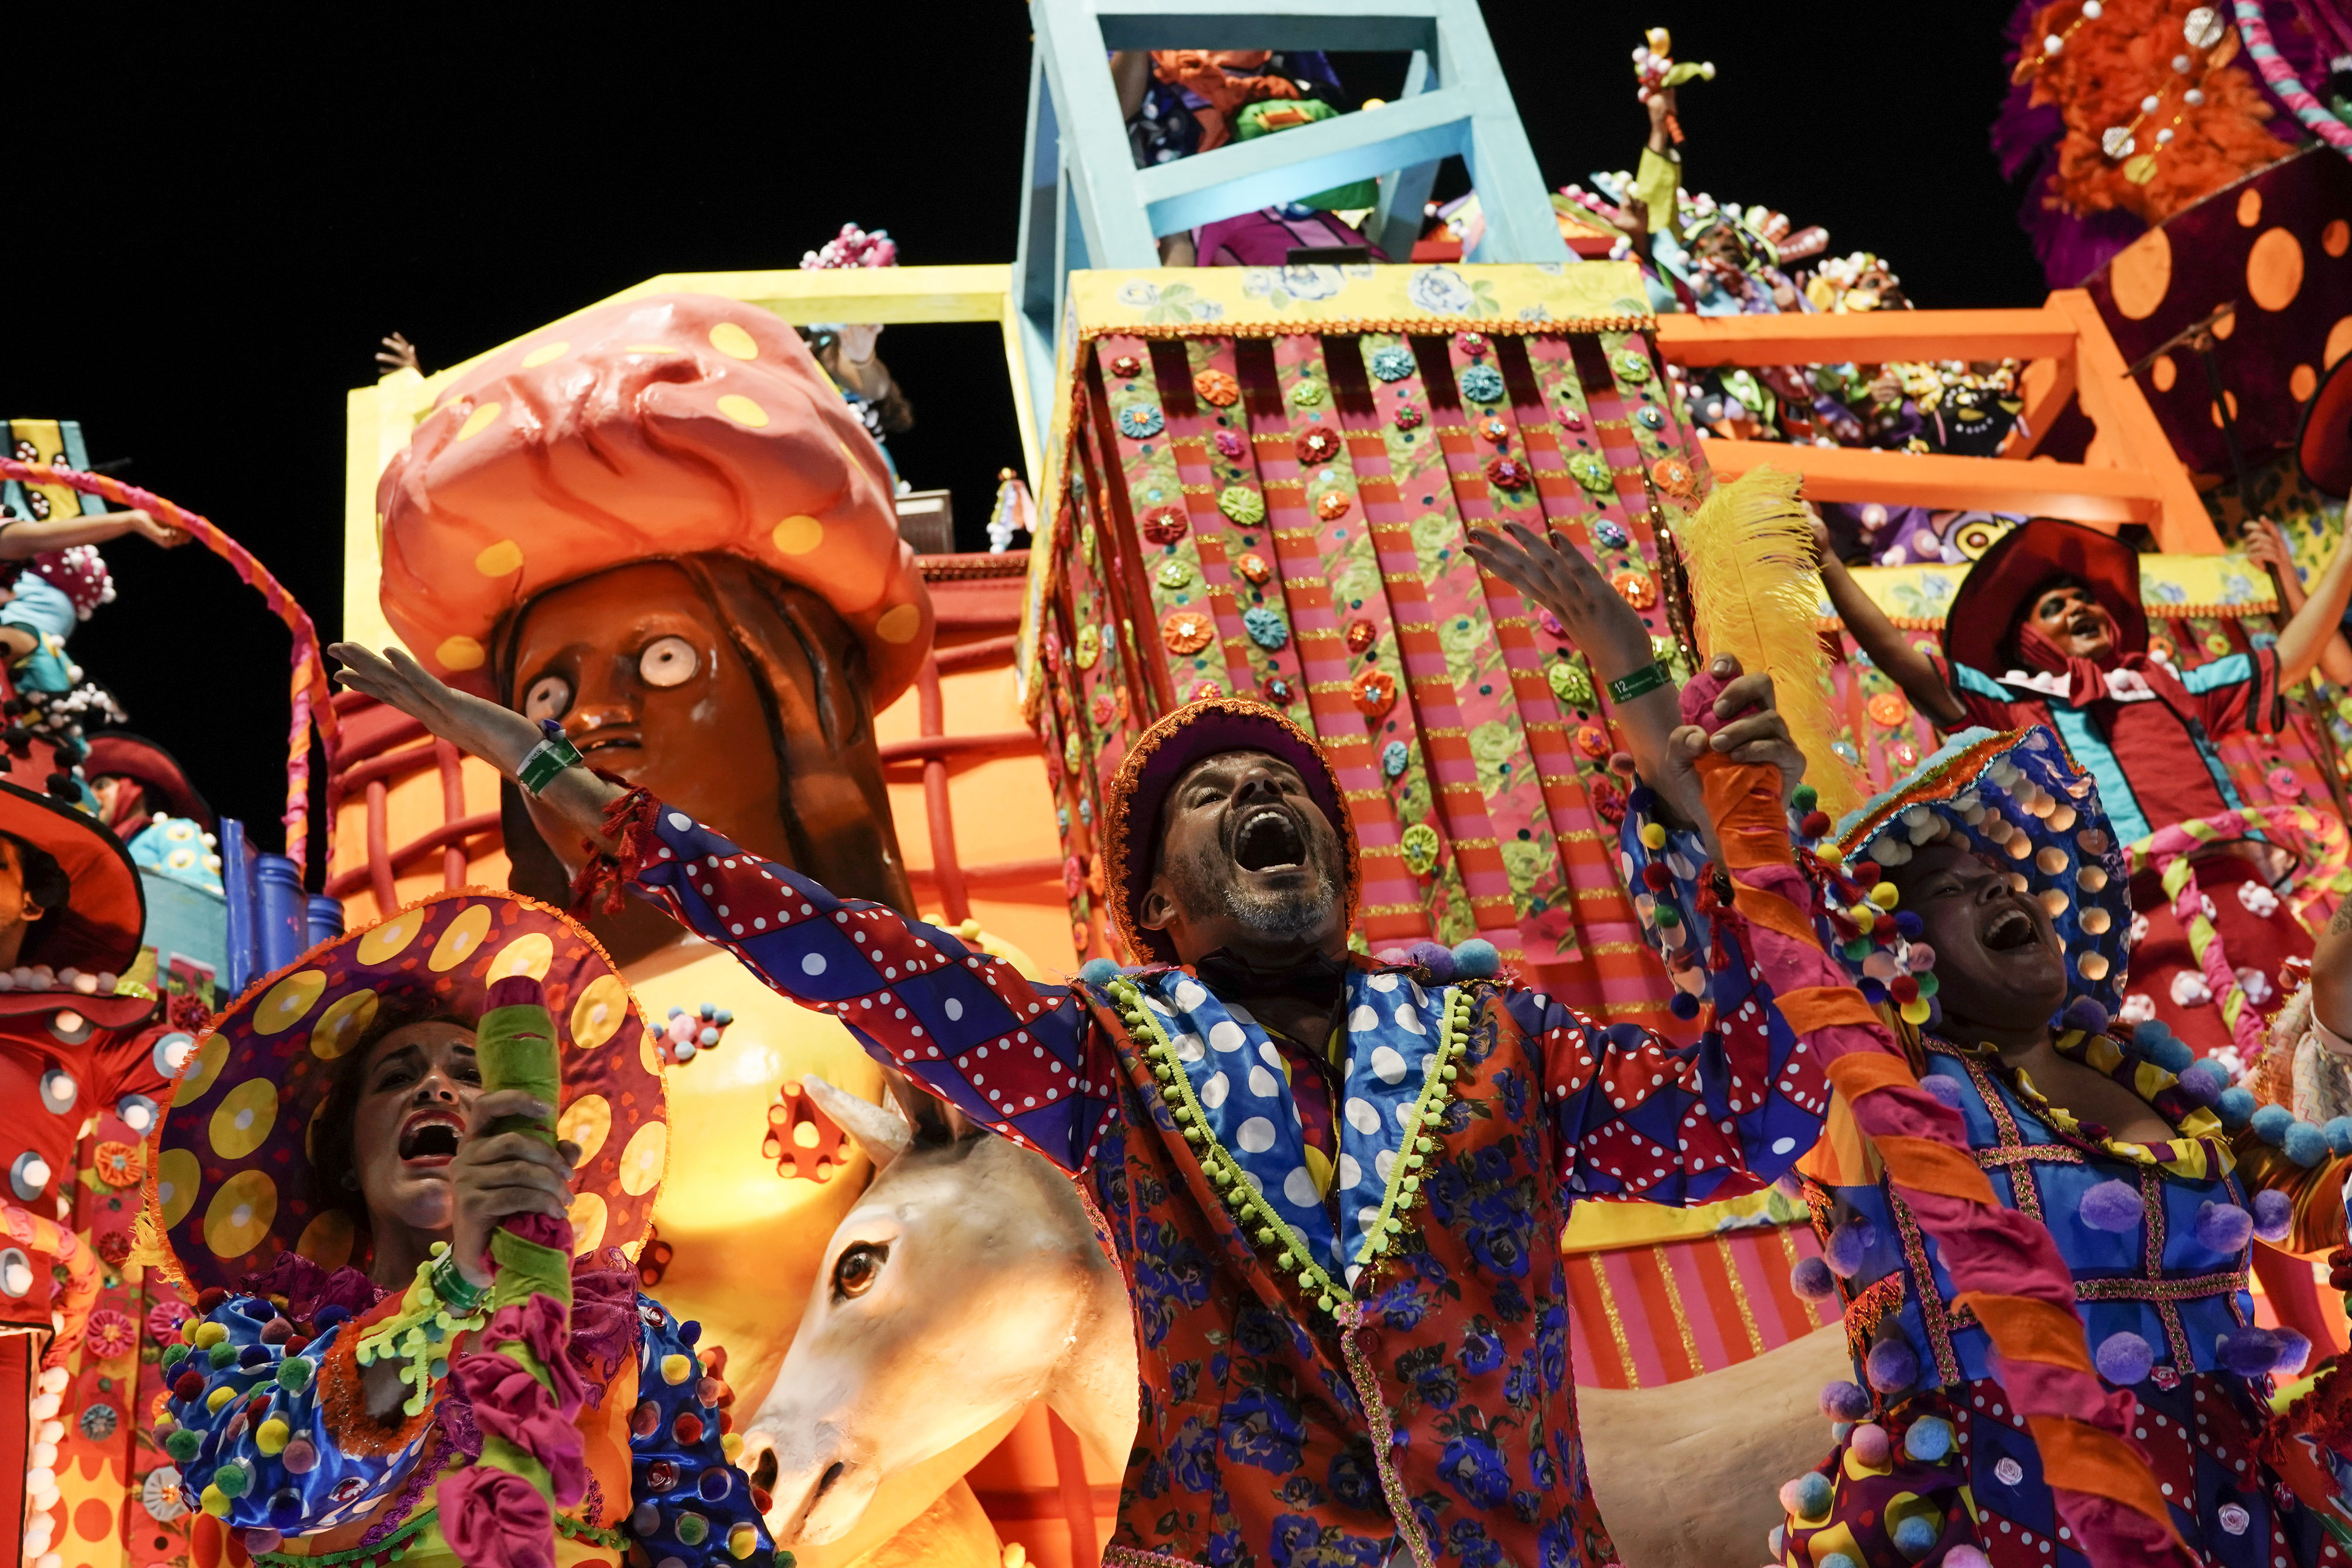 Performers from the Paraiso do Tuiuti samba school parade on a float during Carnival celebrations at the Sambadrome in Rio de Janeiro, Brazil, Tuesday, March 5, 2019. (AP Photo/Leo Correa)